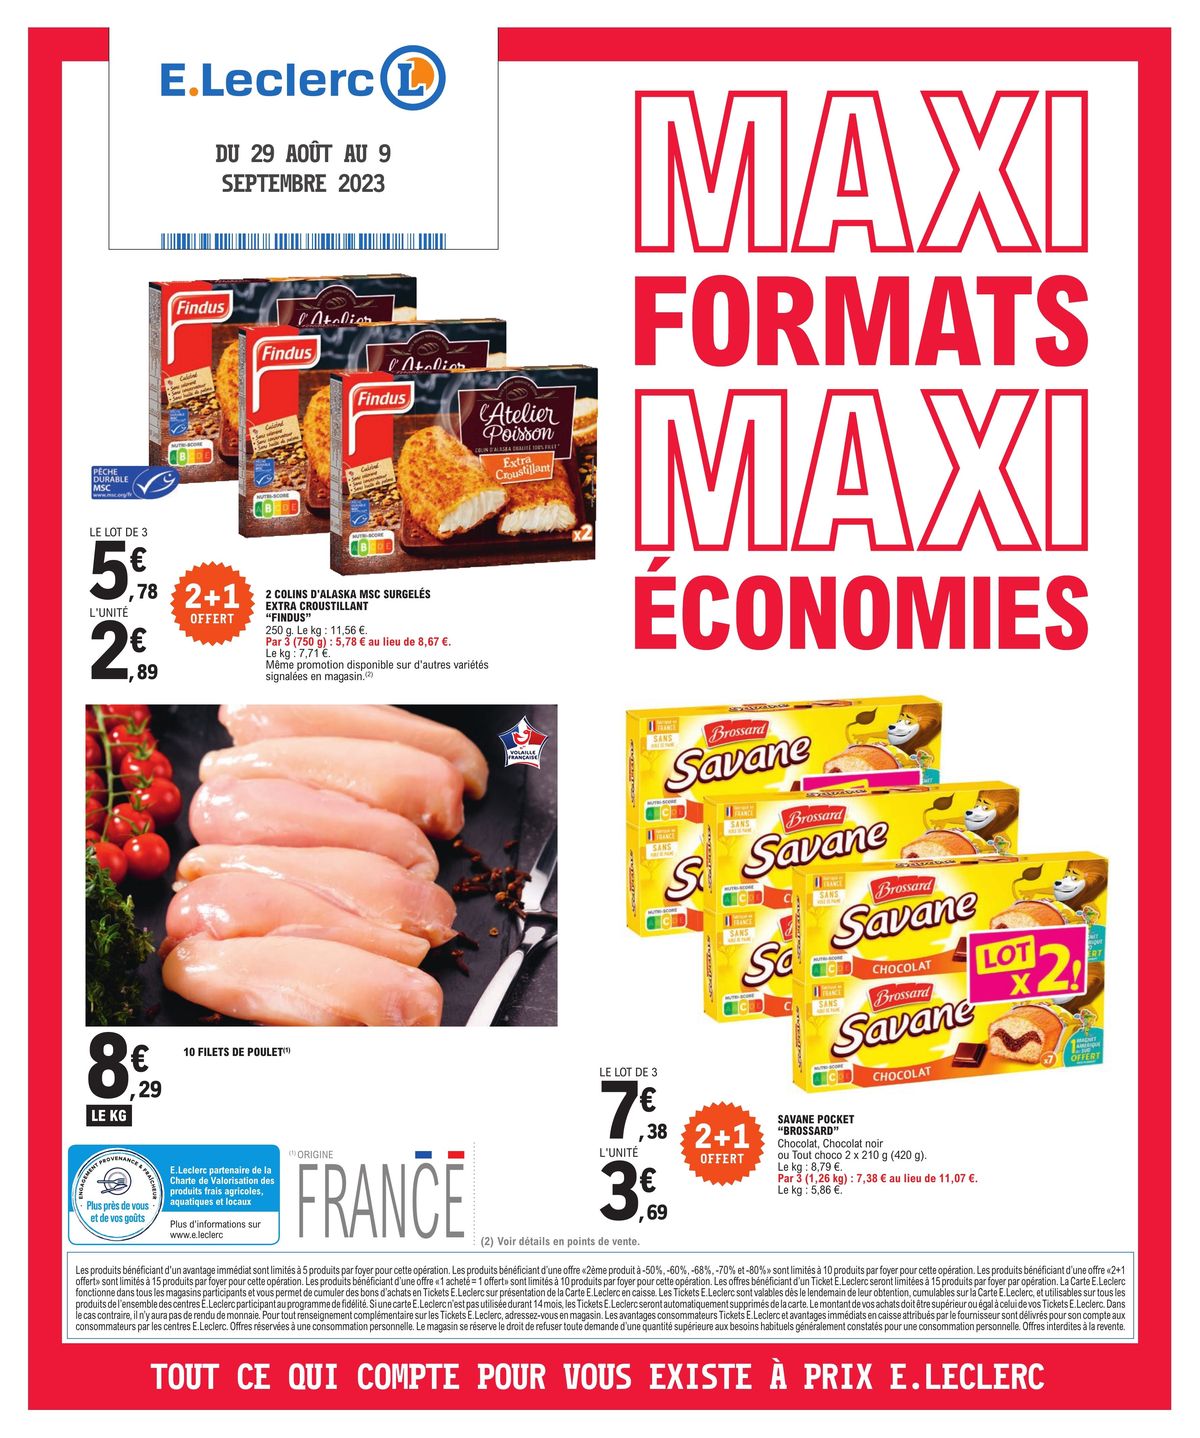 Catalogue Maxi formats maxi économies, page 00001